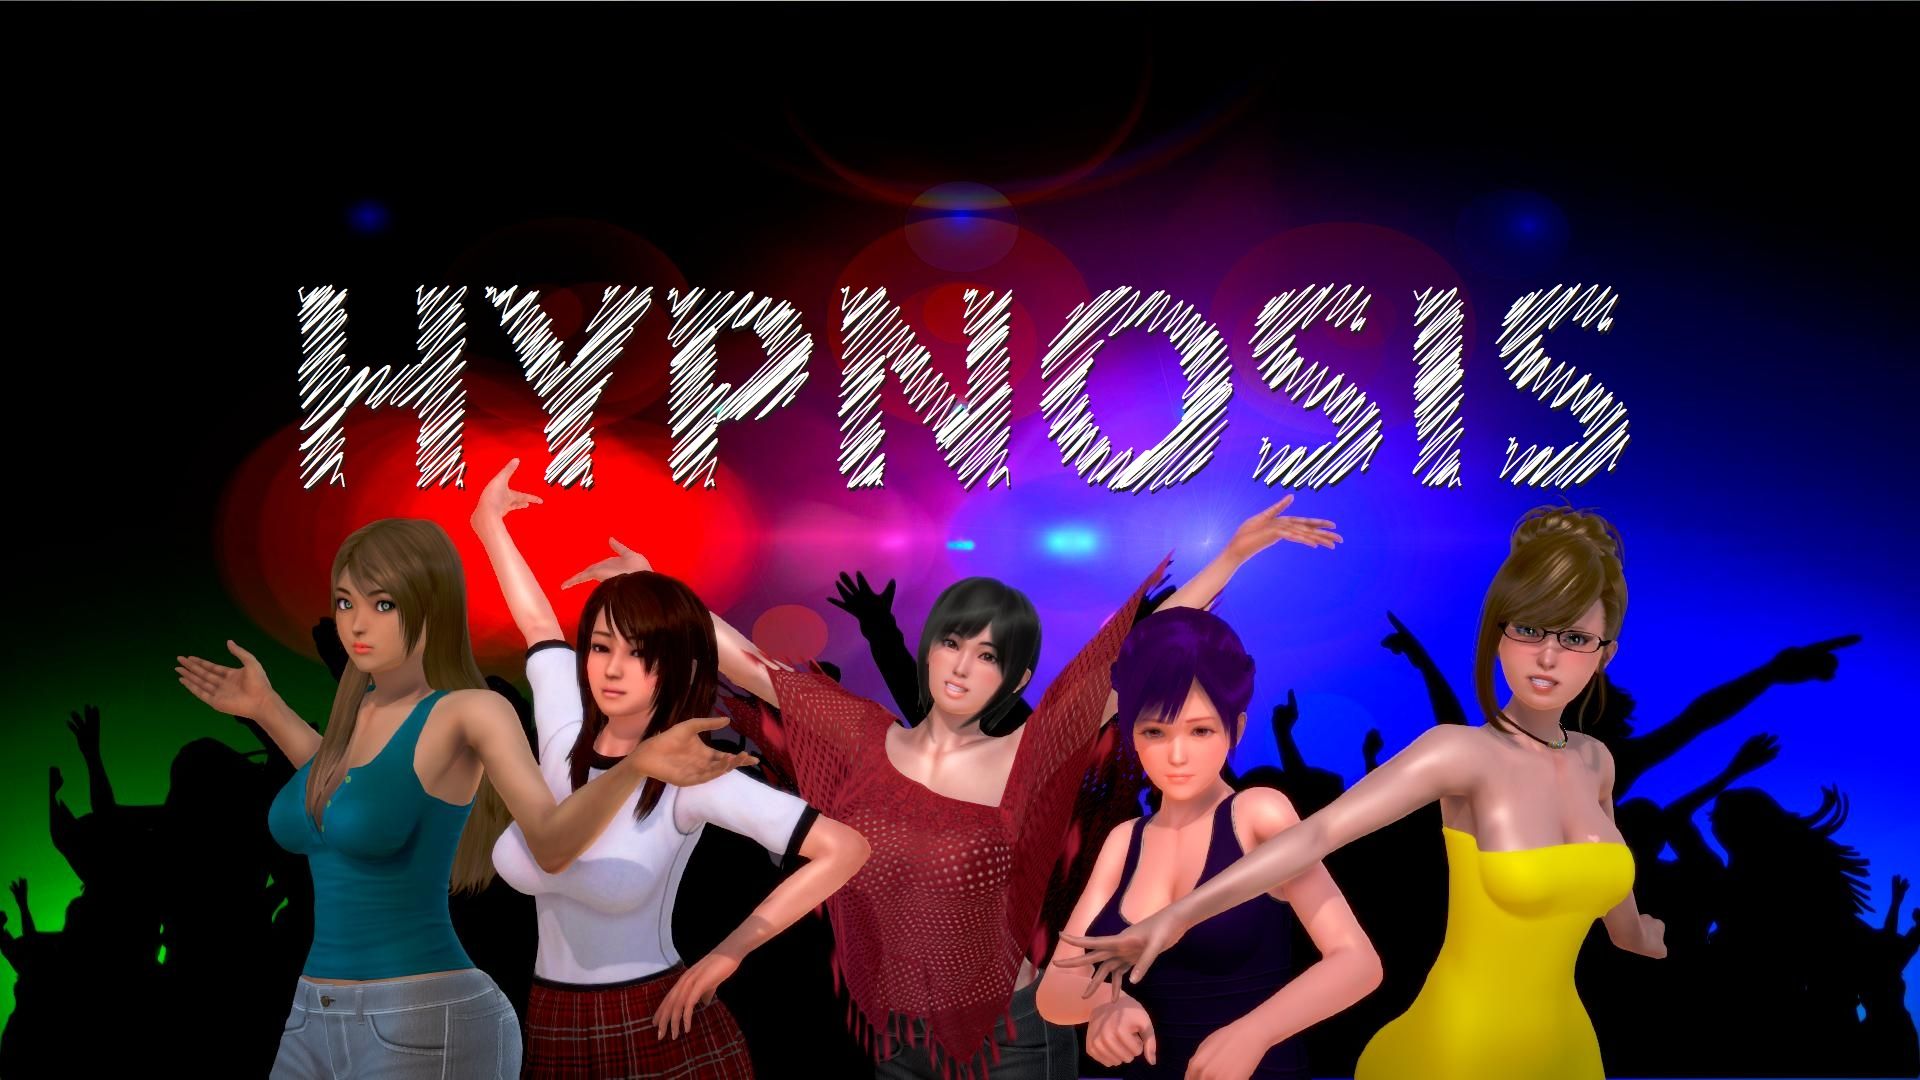 Hypnosis 18. Hypnosis игра. Hypnosis игра SLG. Флеш игра интернет гипноз 2. Гипноз прохождение.